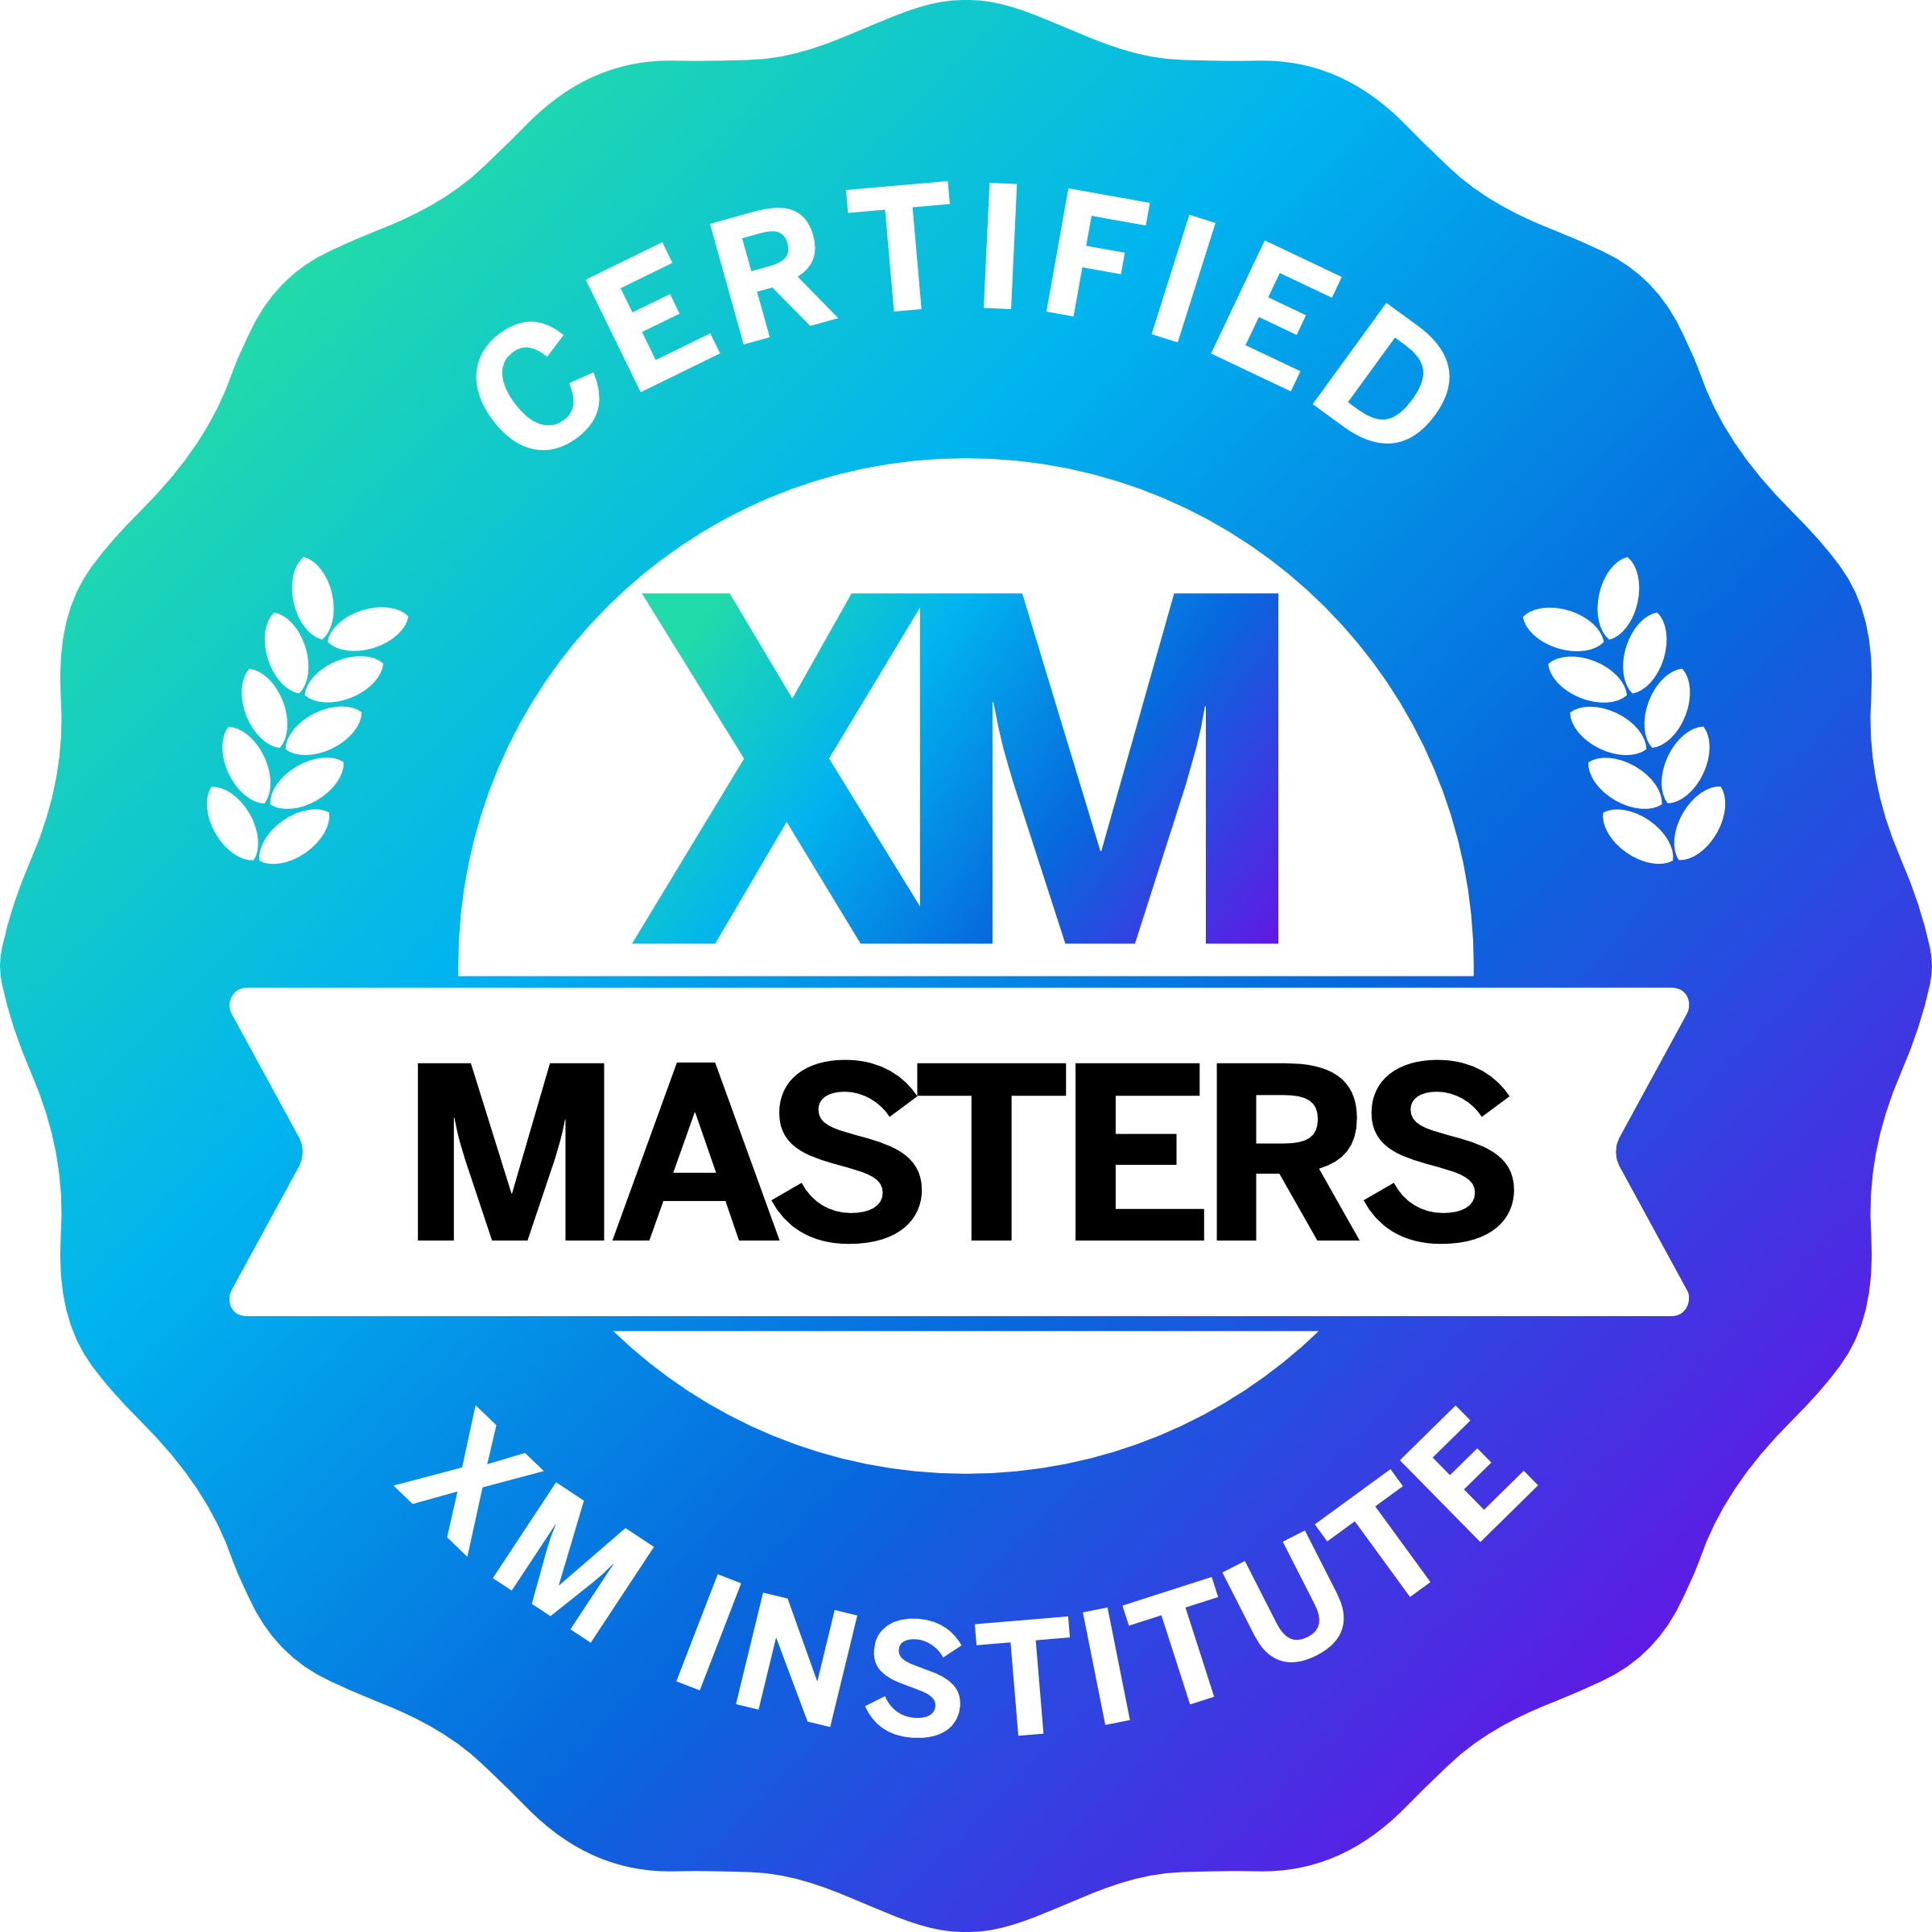 Xm Institute Certified Masters Badge